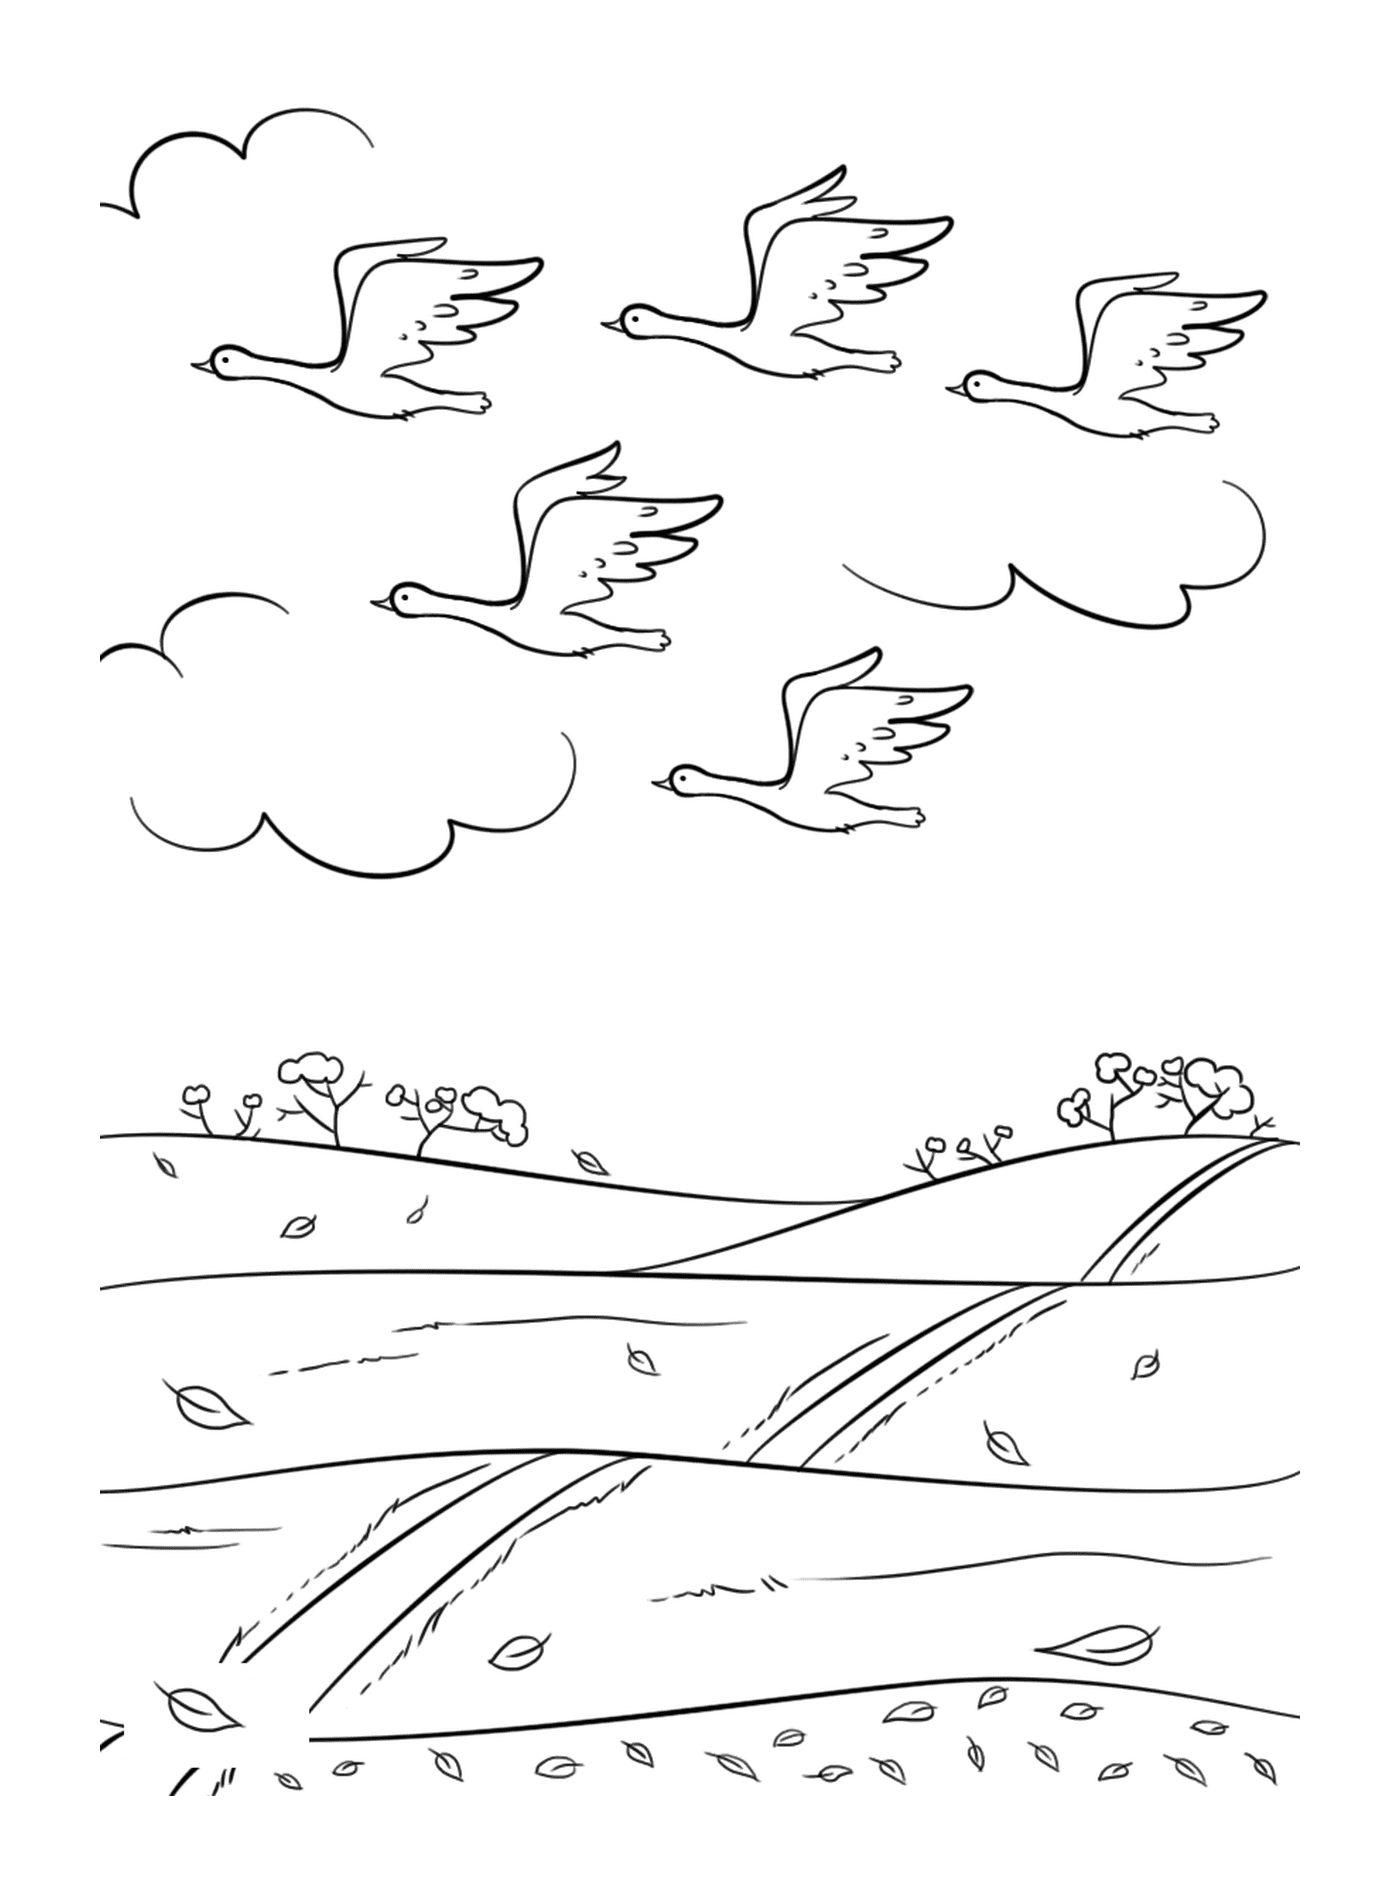  Группа птиц летает над полем 